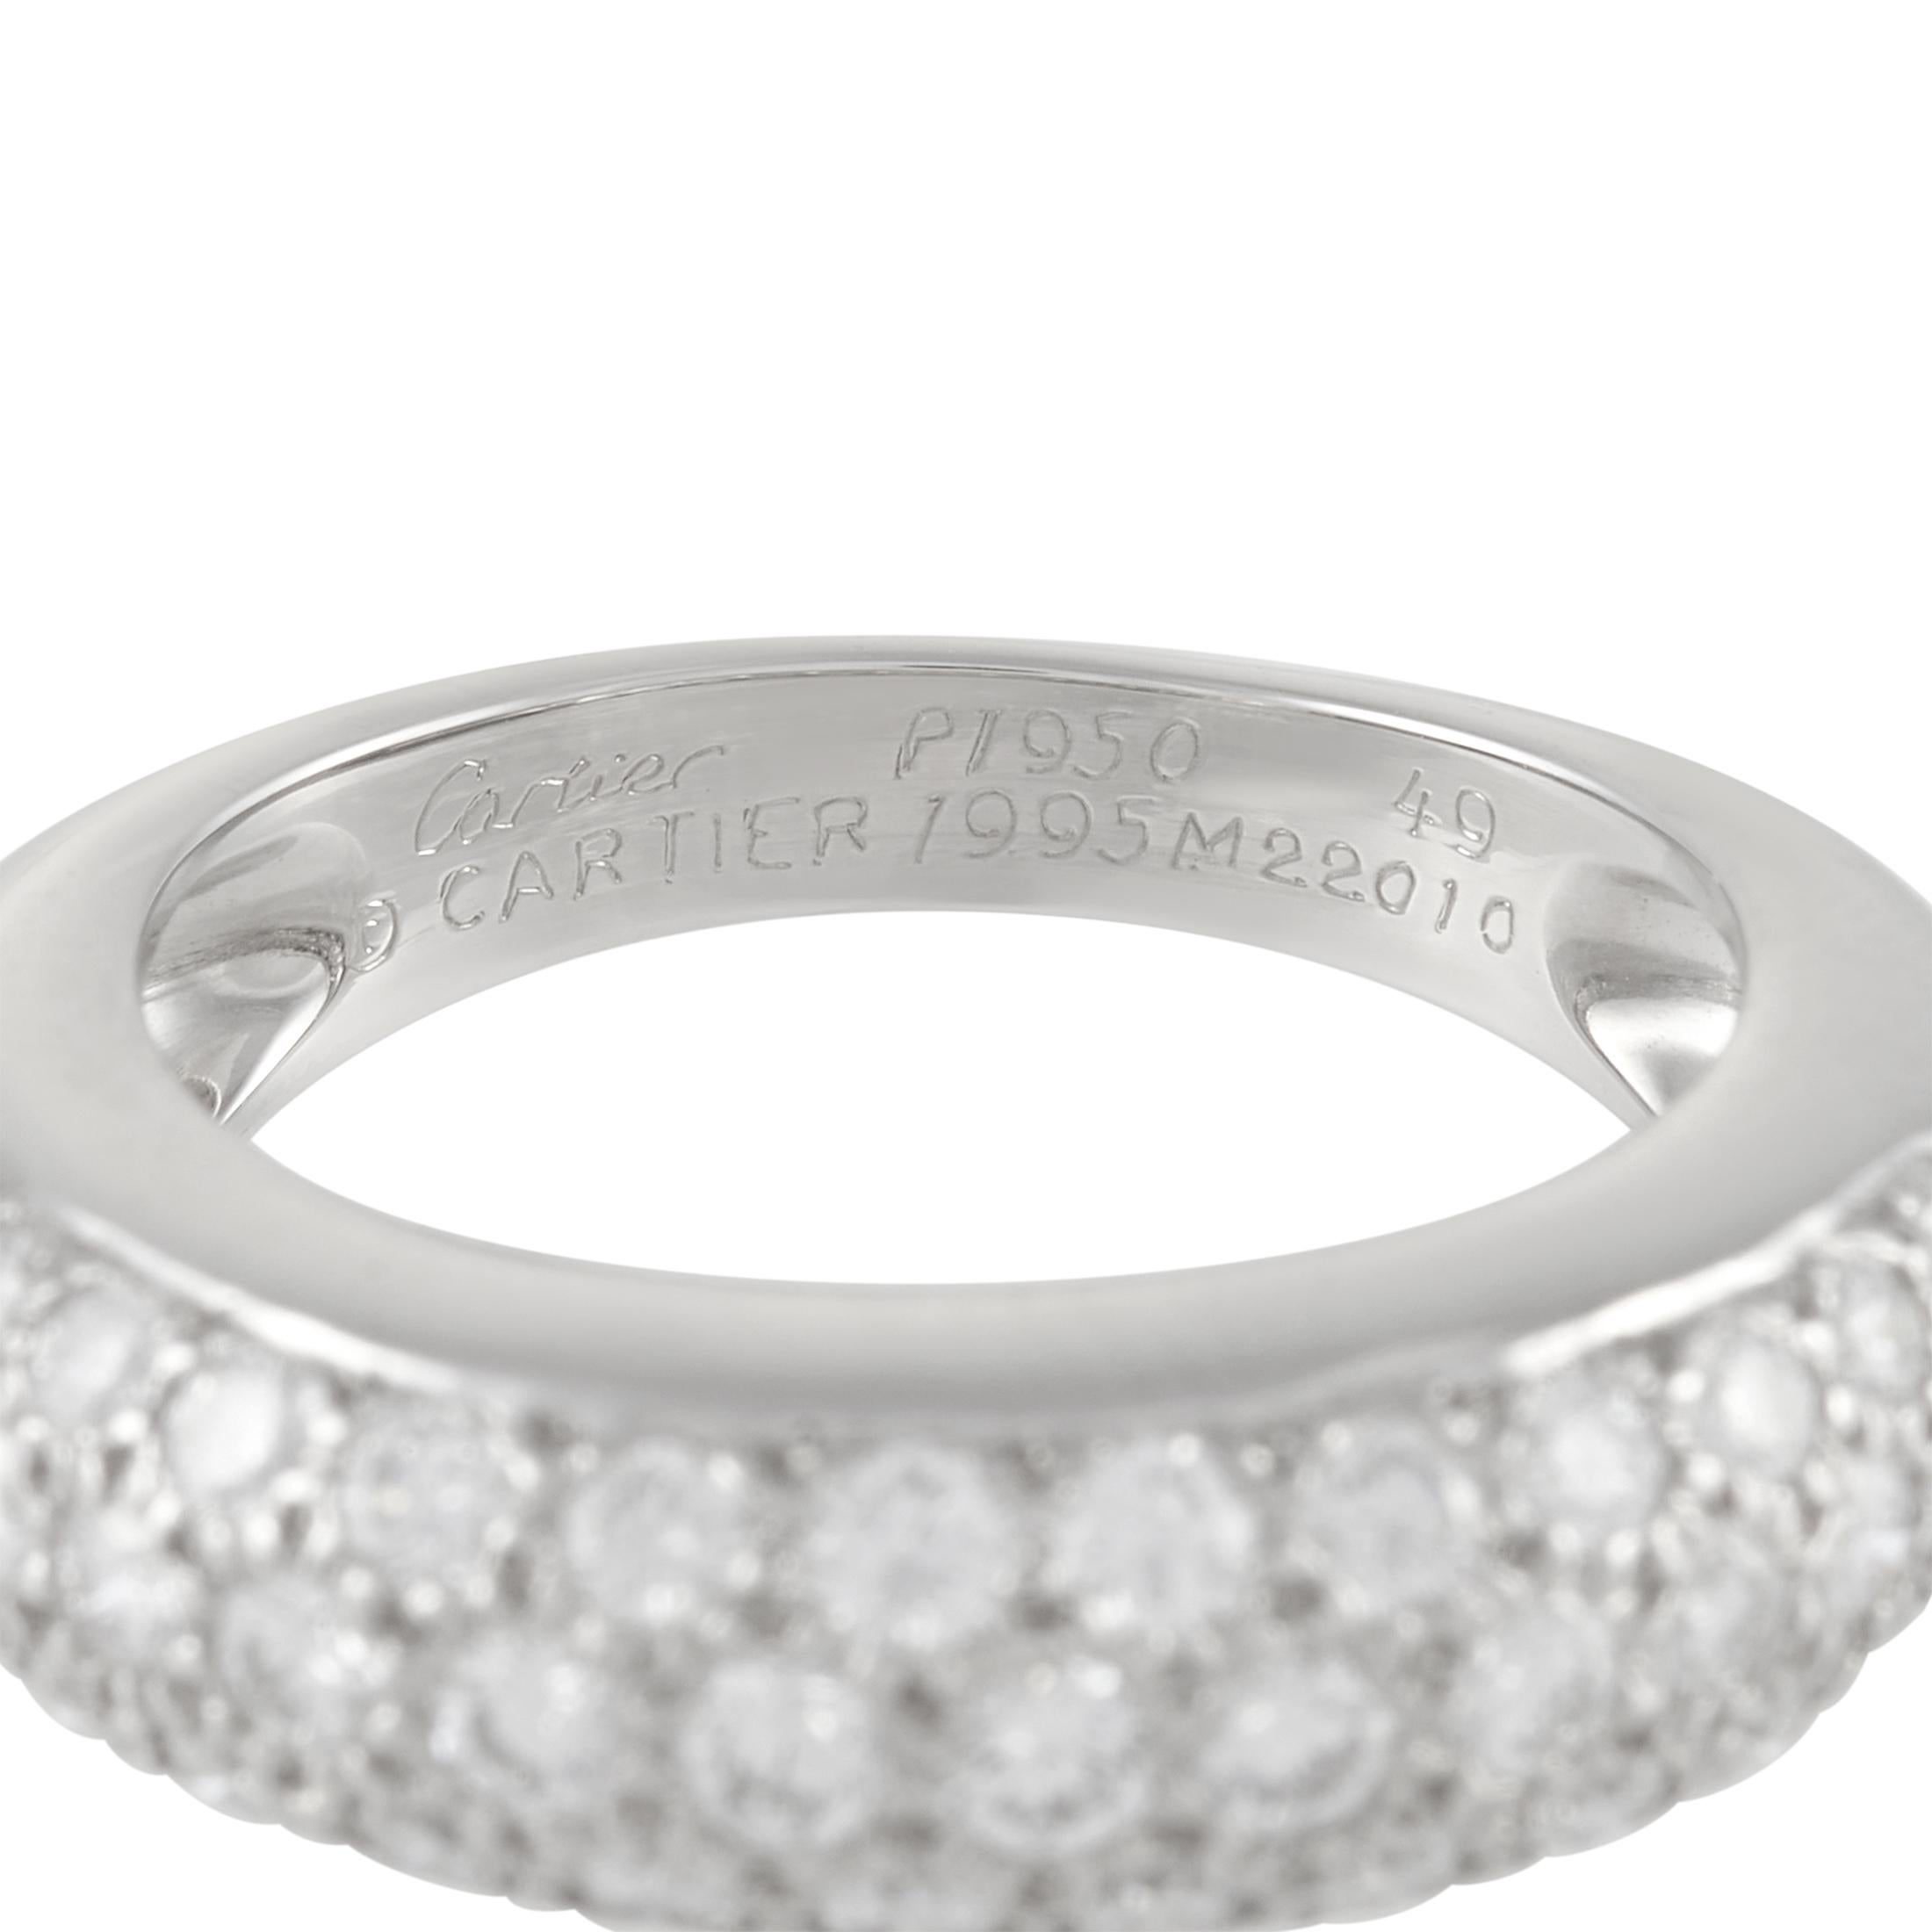 Women's Cartier 18K White Gold Diamond Band Ring